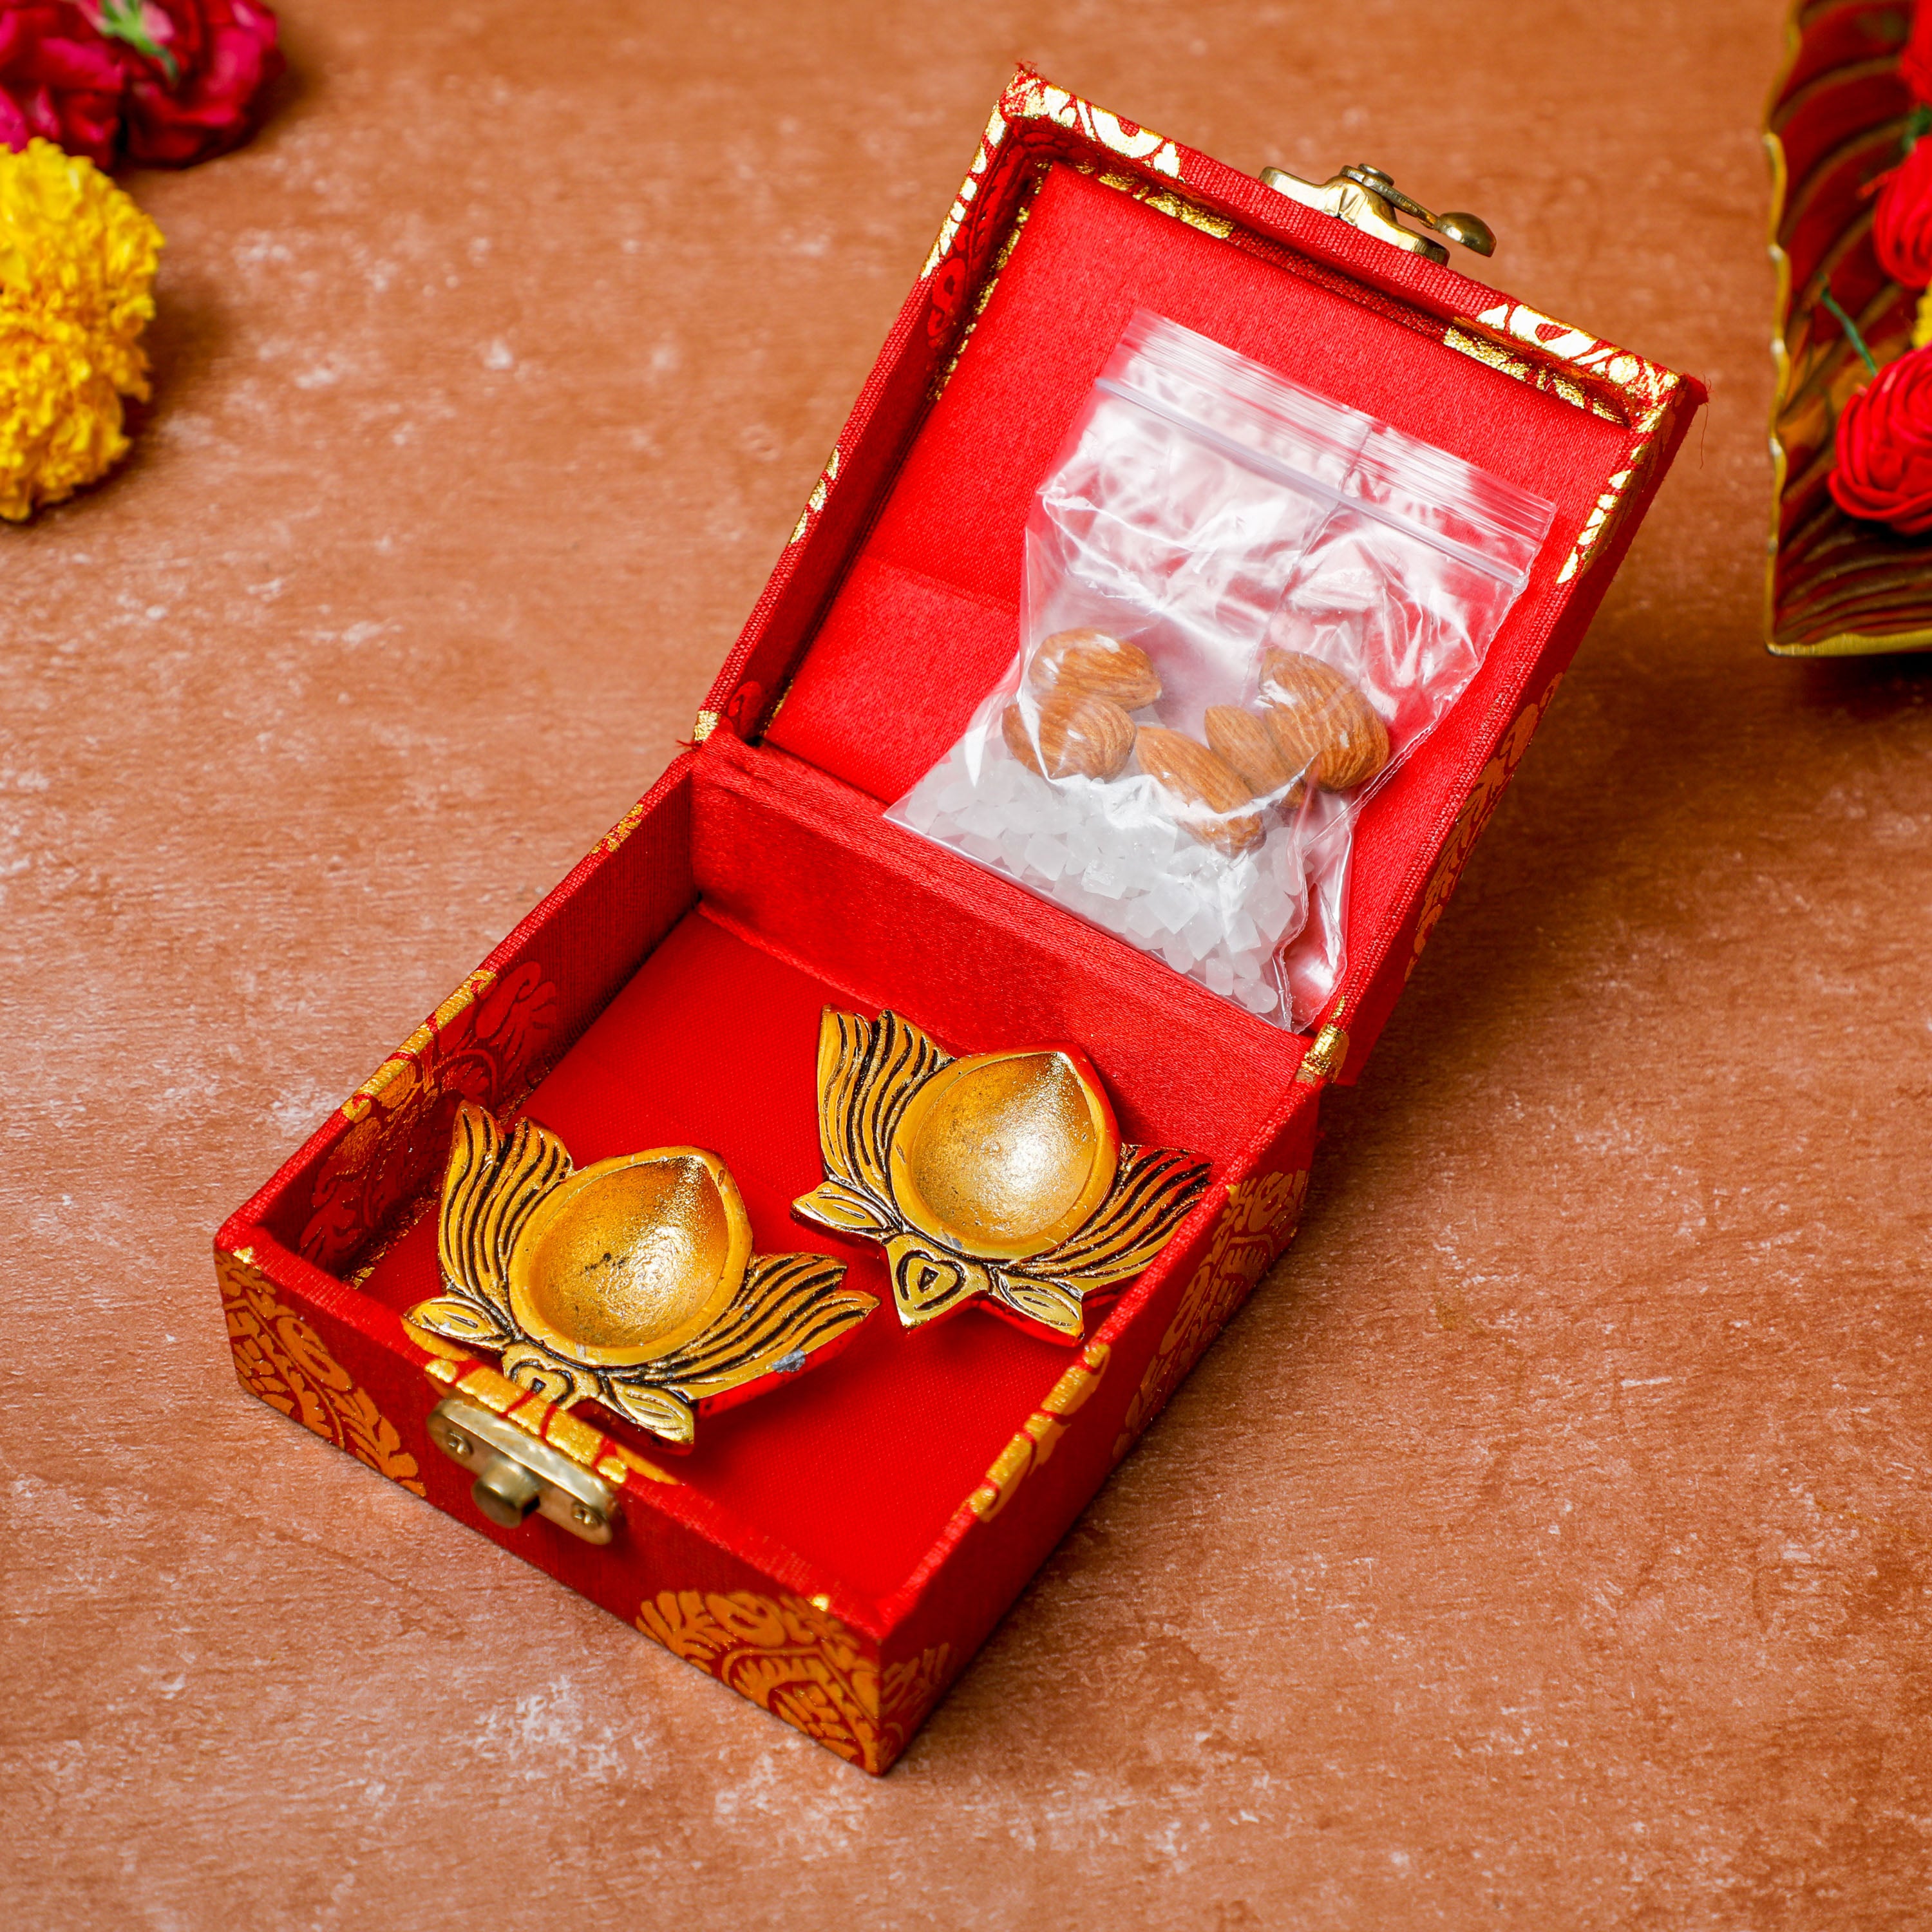 Buy Wedding Return Gift Online In India - Etsy India